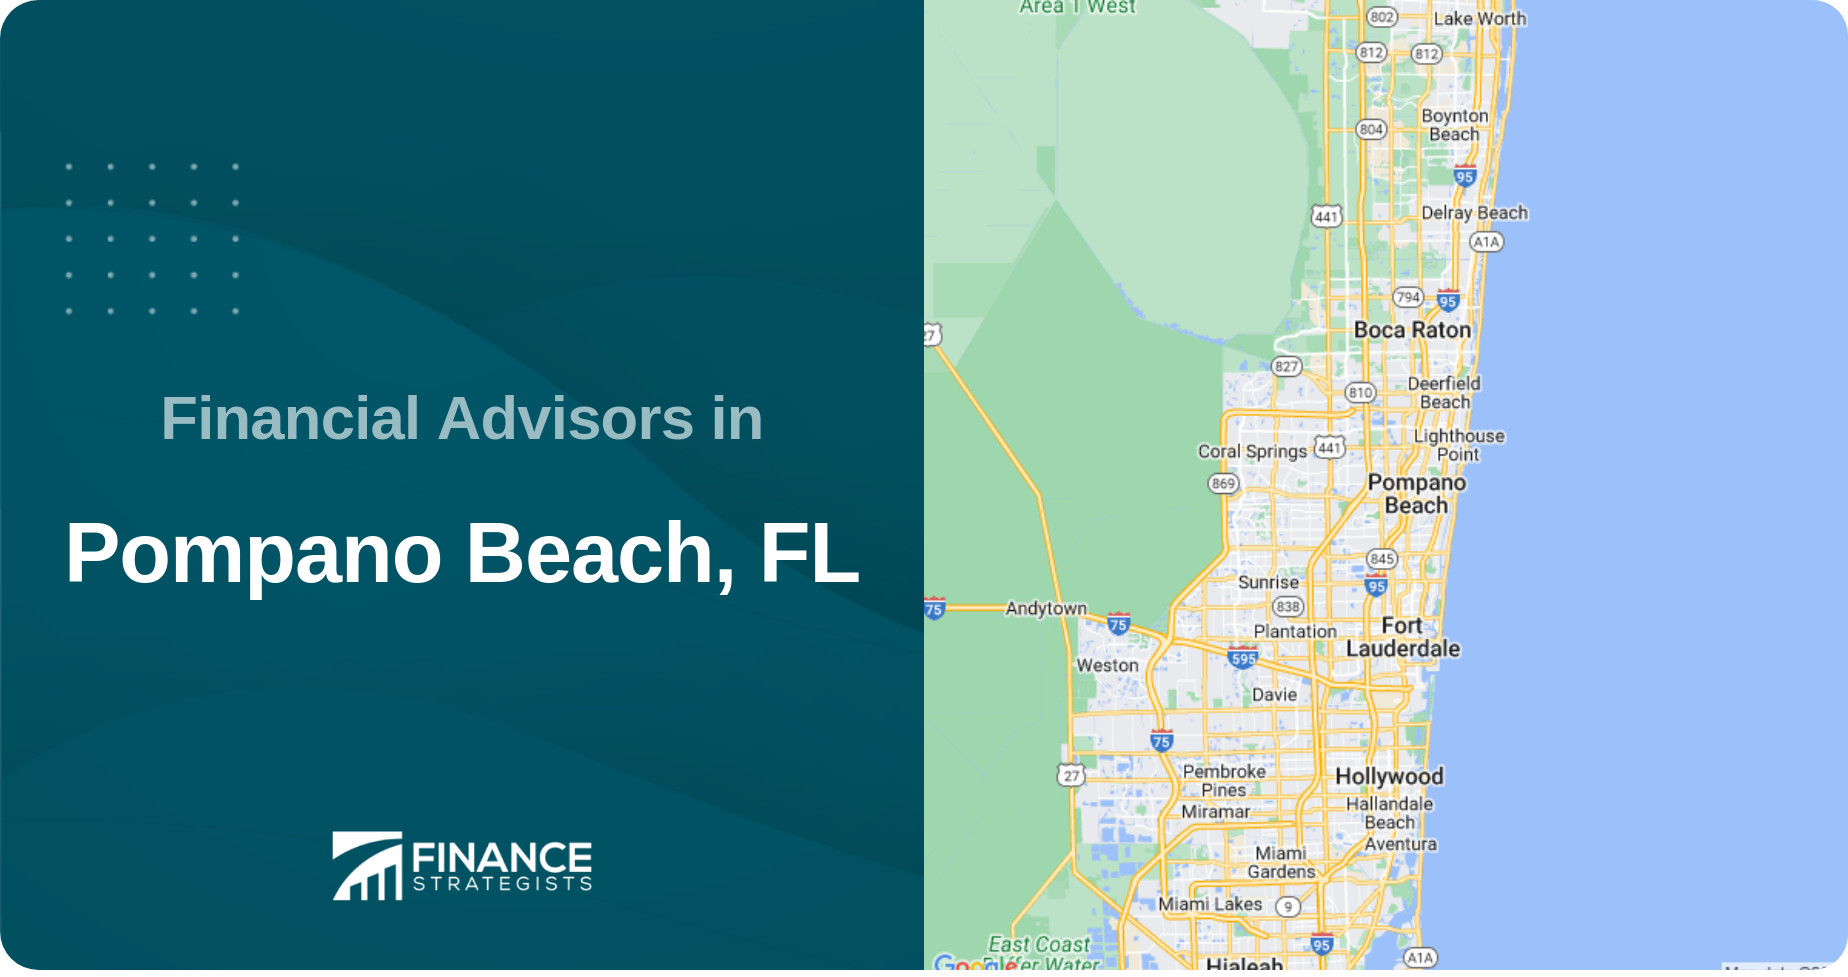 Financial Advisors in Pompano Beach, FL